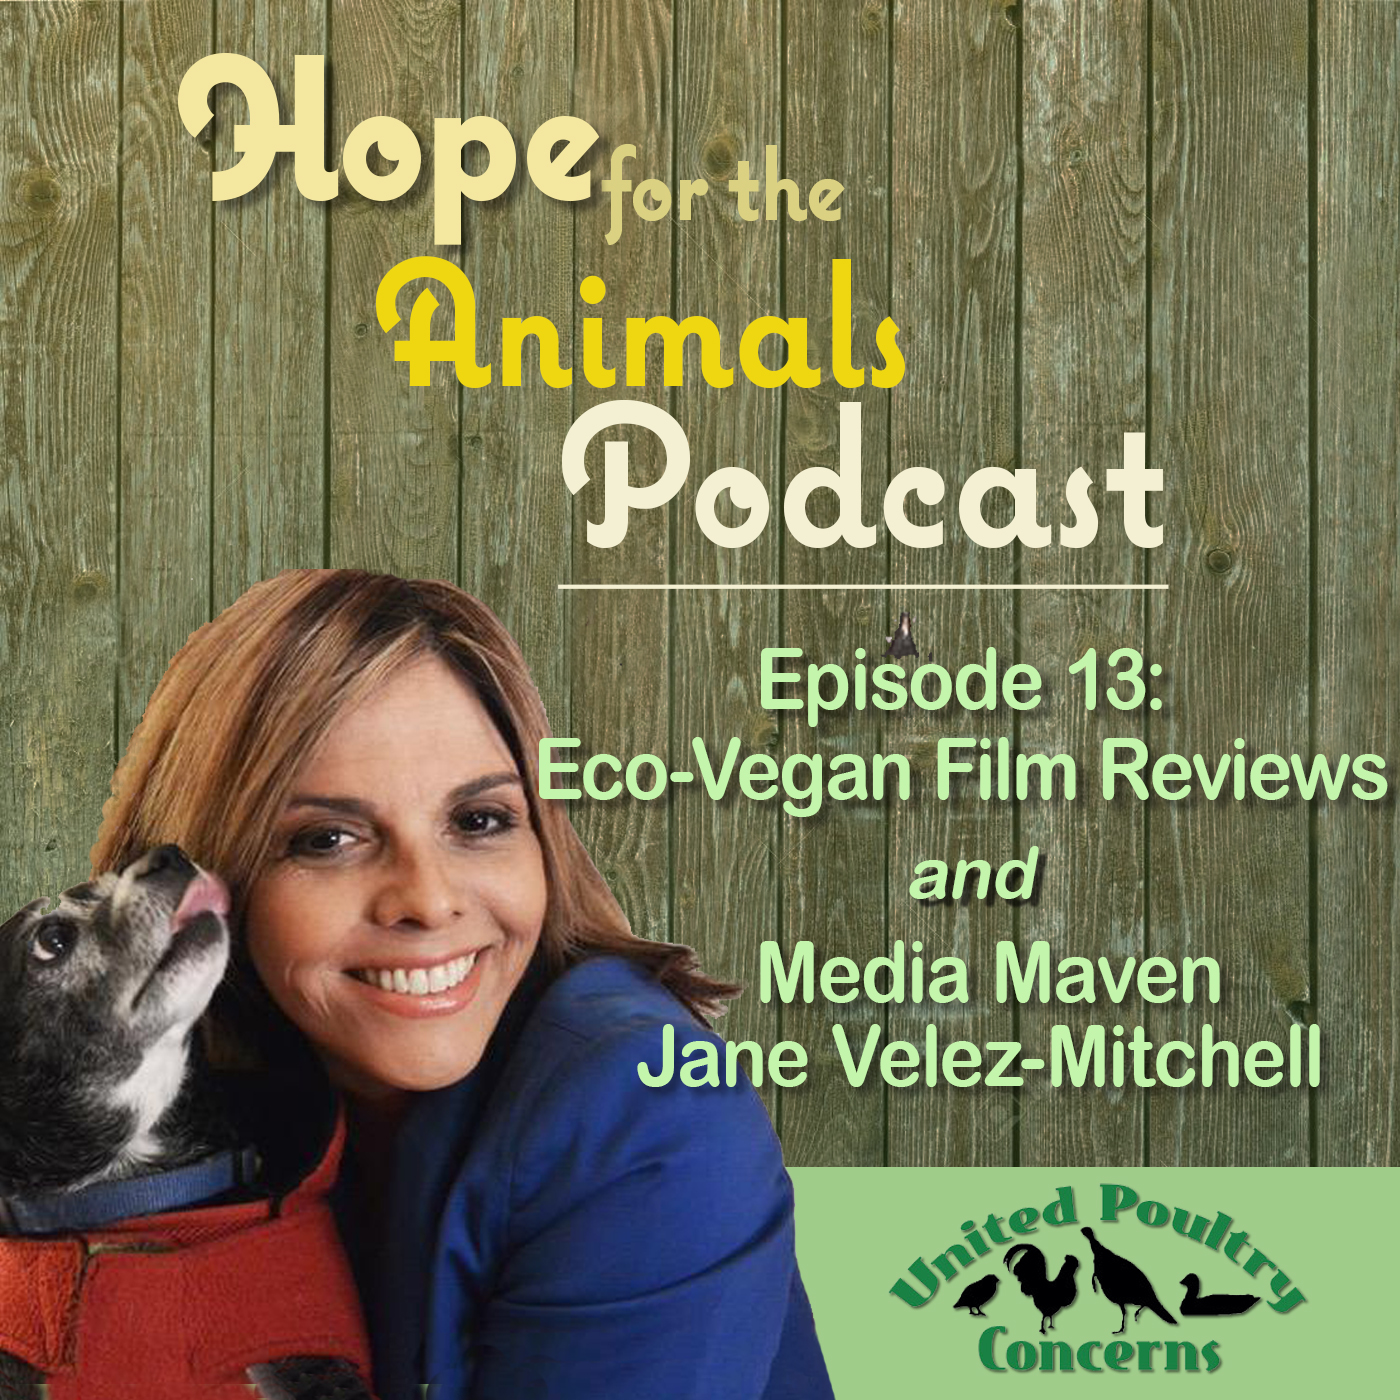 Episode 13: Eco-Vegan Film Reviews and Media Maven Jane Velez-Mitchell